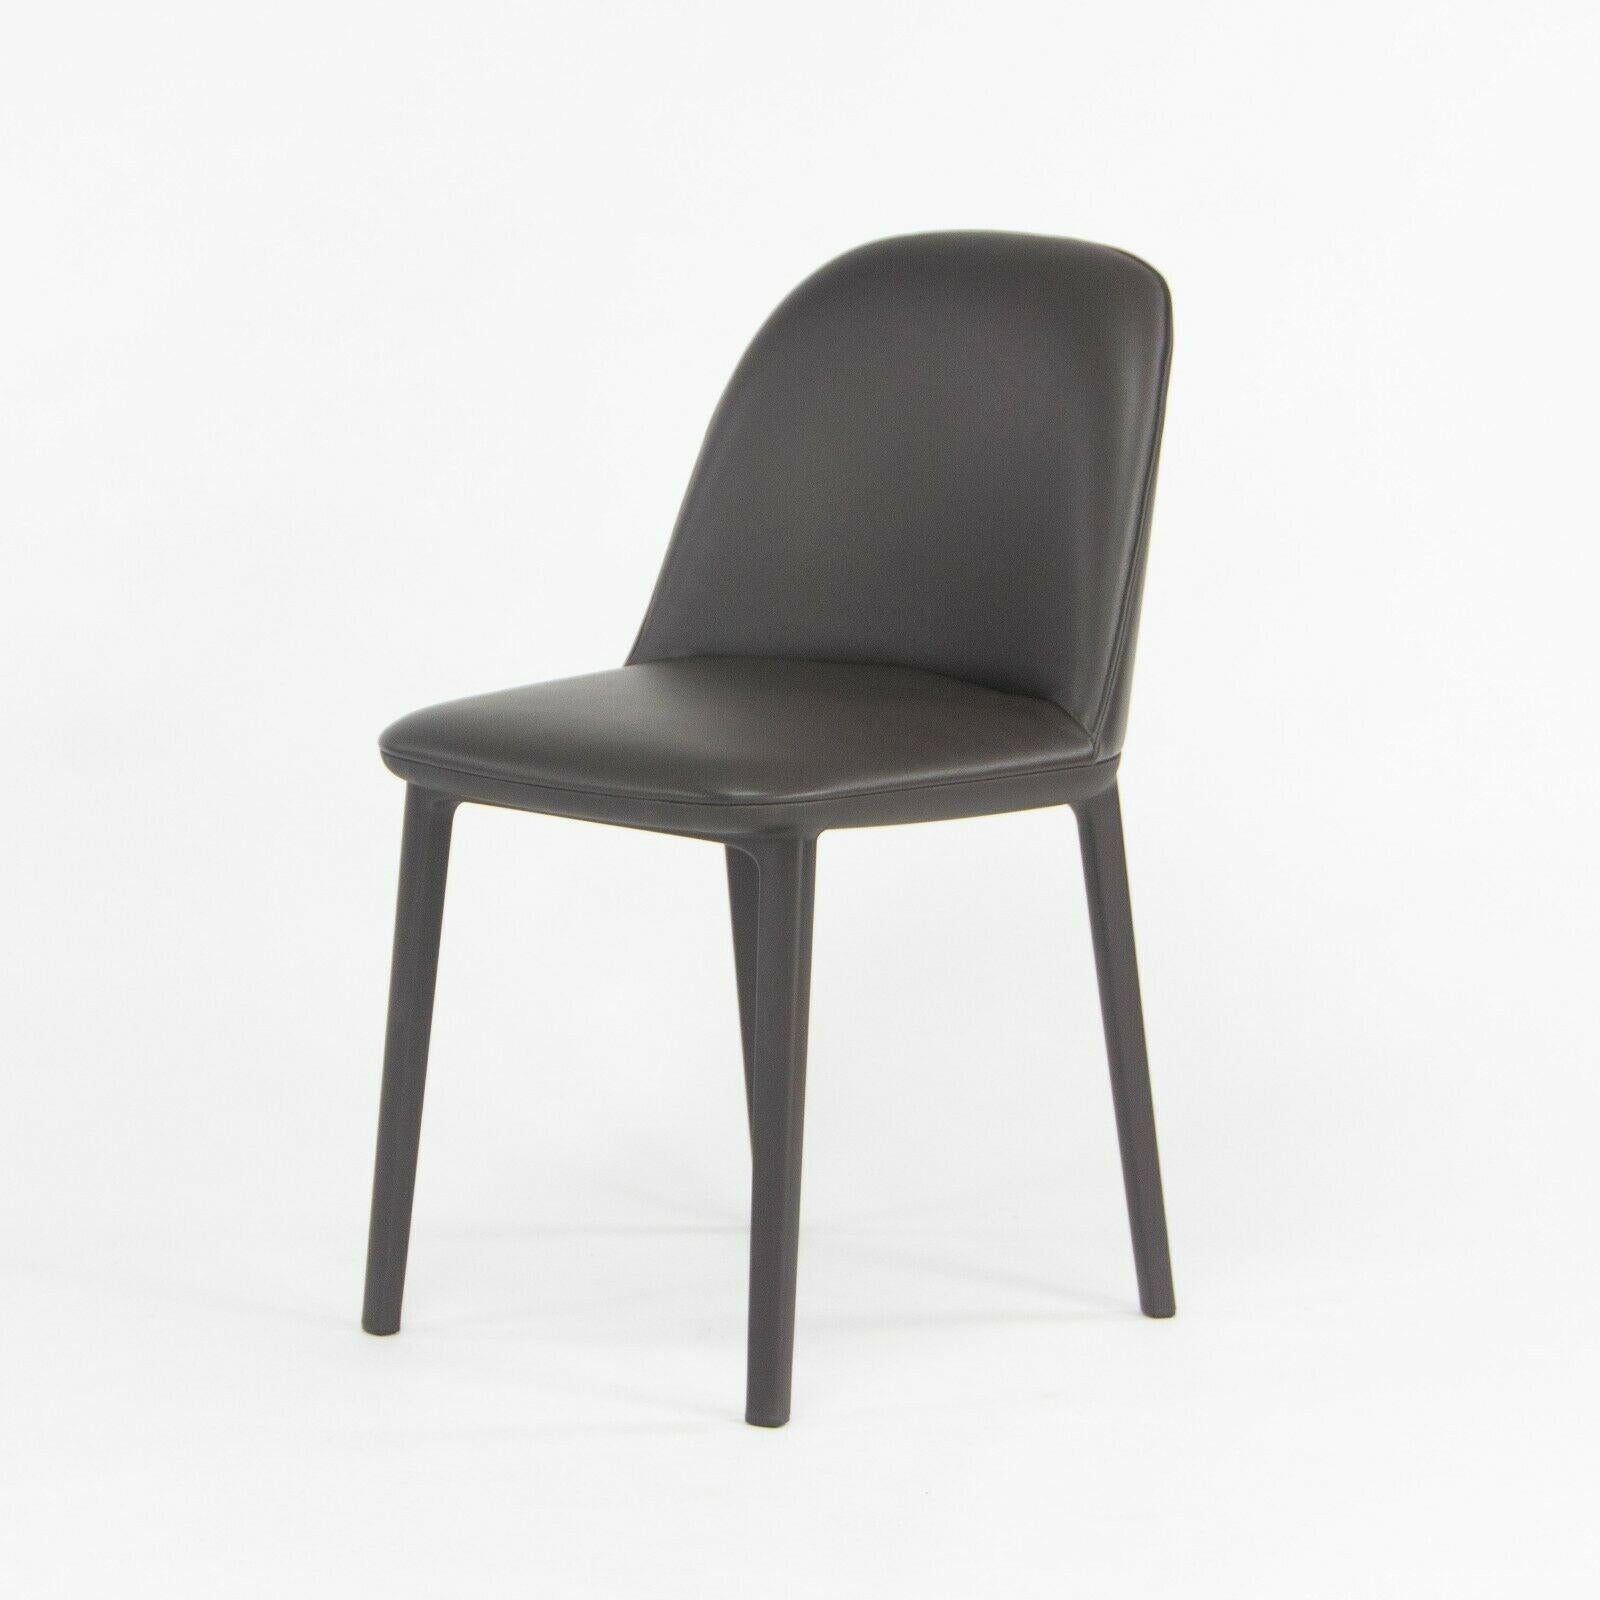 2019 Vitra Softshell Side Chair w Dark Brown Leather by Ronan & Erwan Bouroullec (Moderne) im Angebot